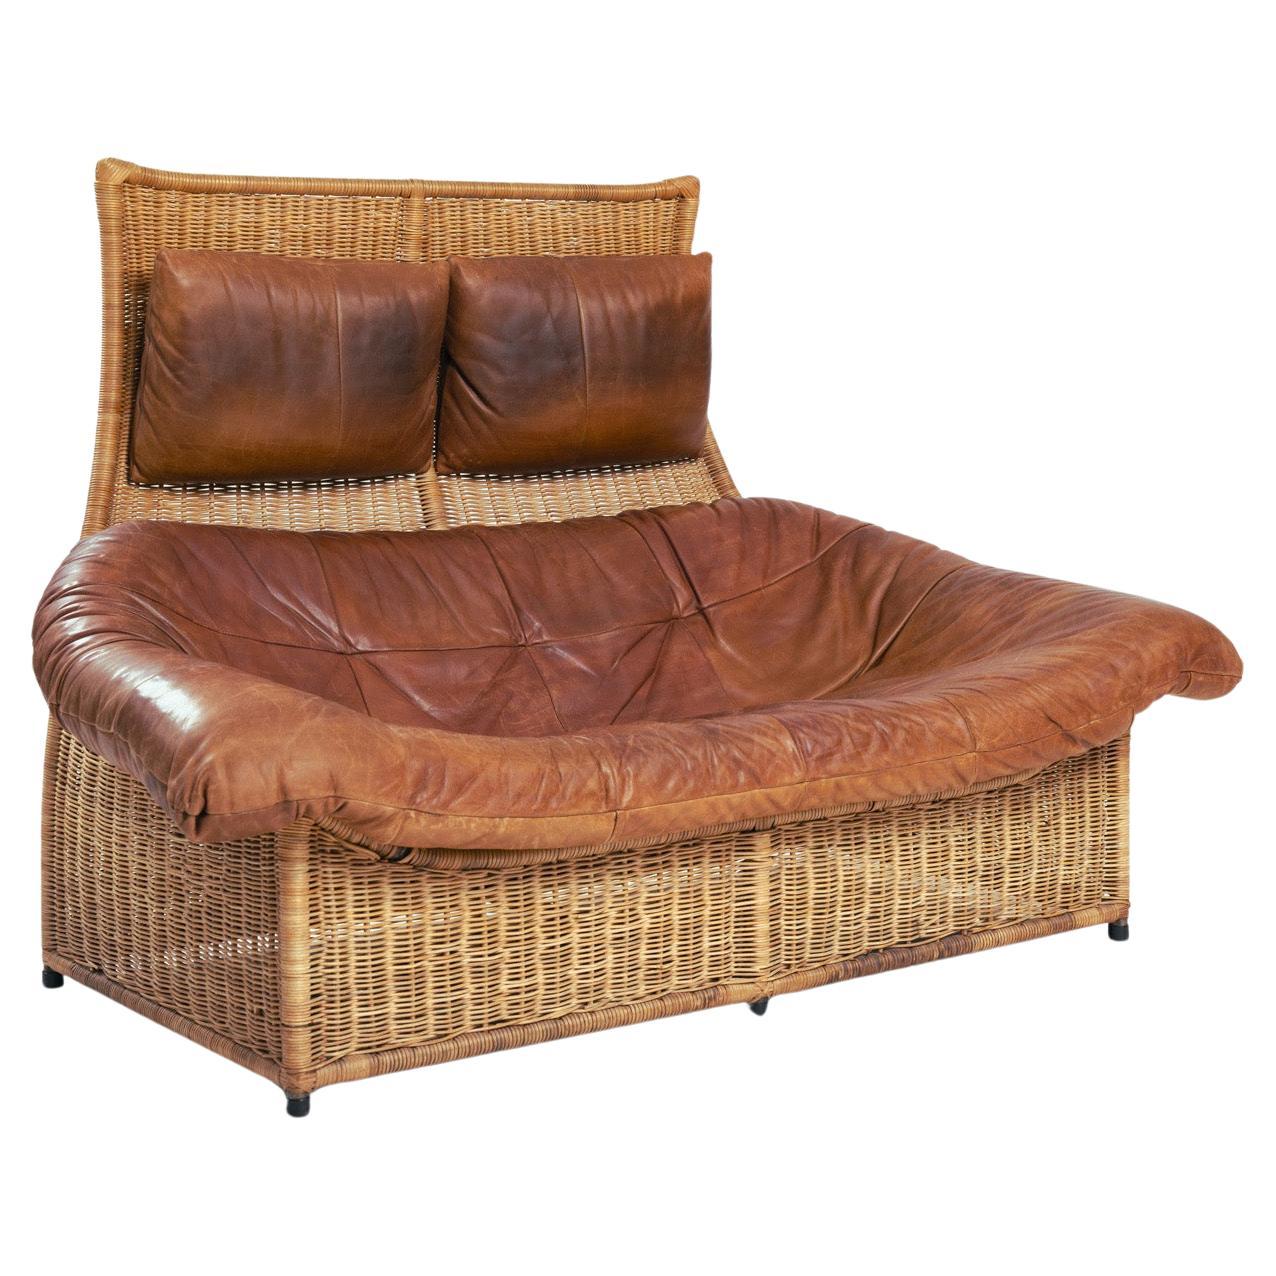 Dutch The Rock Gerard van den Berg midcentury modern rattan leather 2 seat sofa For Sale